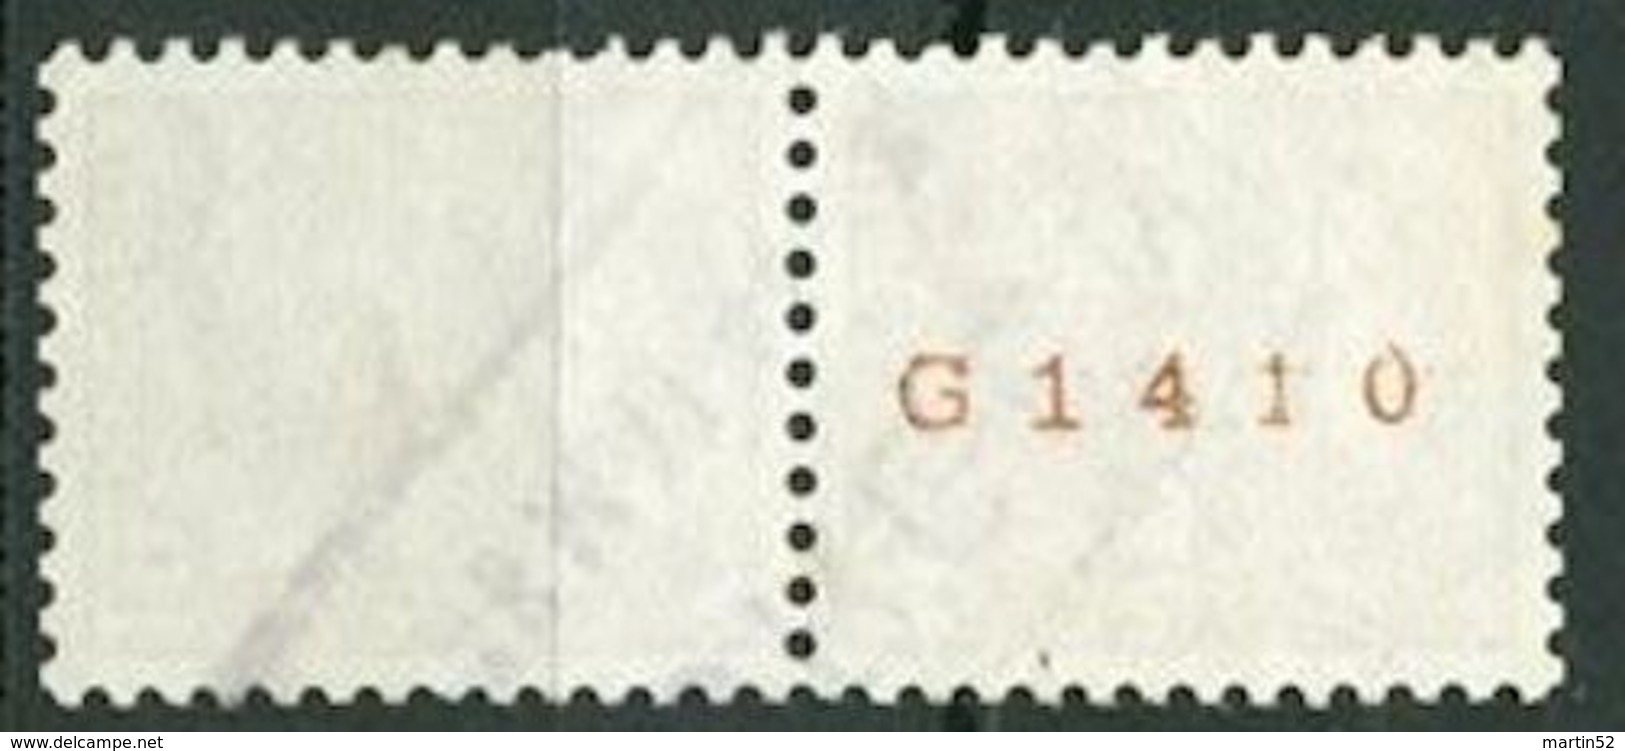 Schweiz Suisse 1942: Chillon Rolle Rouleaux Coil Zu 257RM.01 Mi 363bR (No. G1410) Mit O HORGEN 18 MAI 44 (Zu CHF 6.50) - Rouleaux